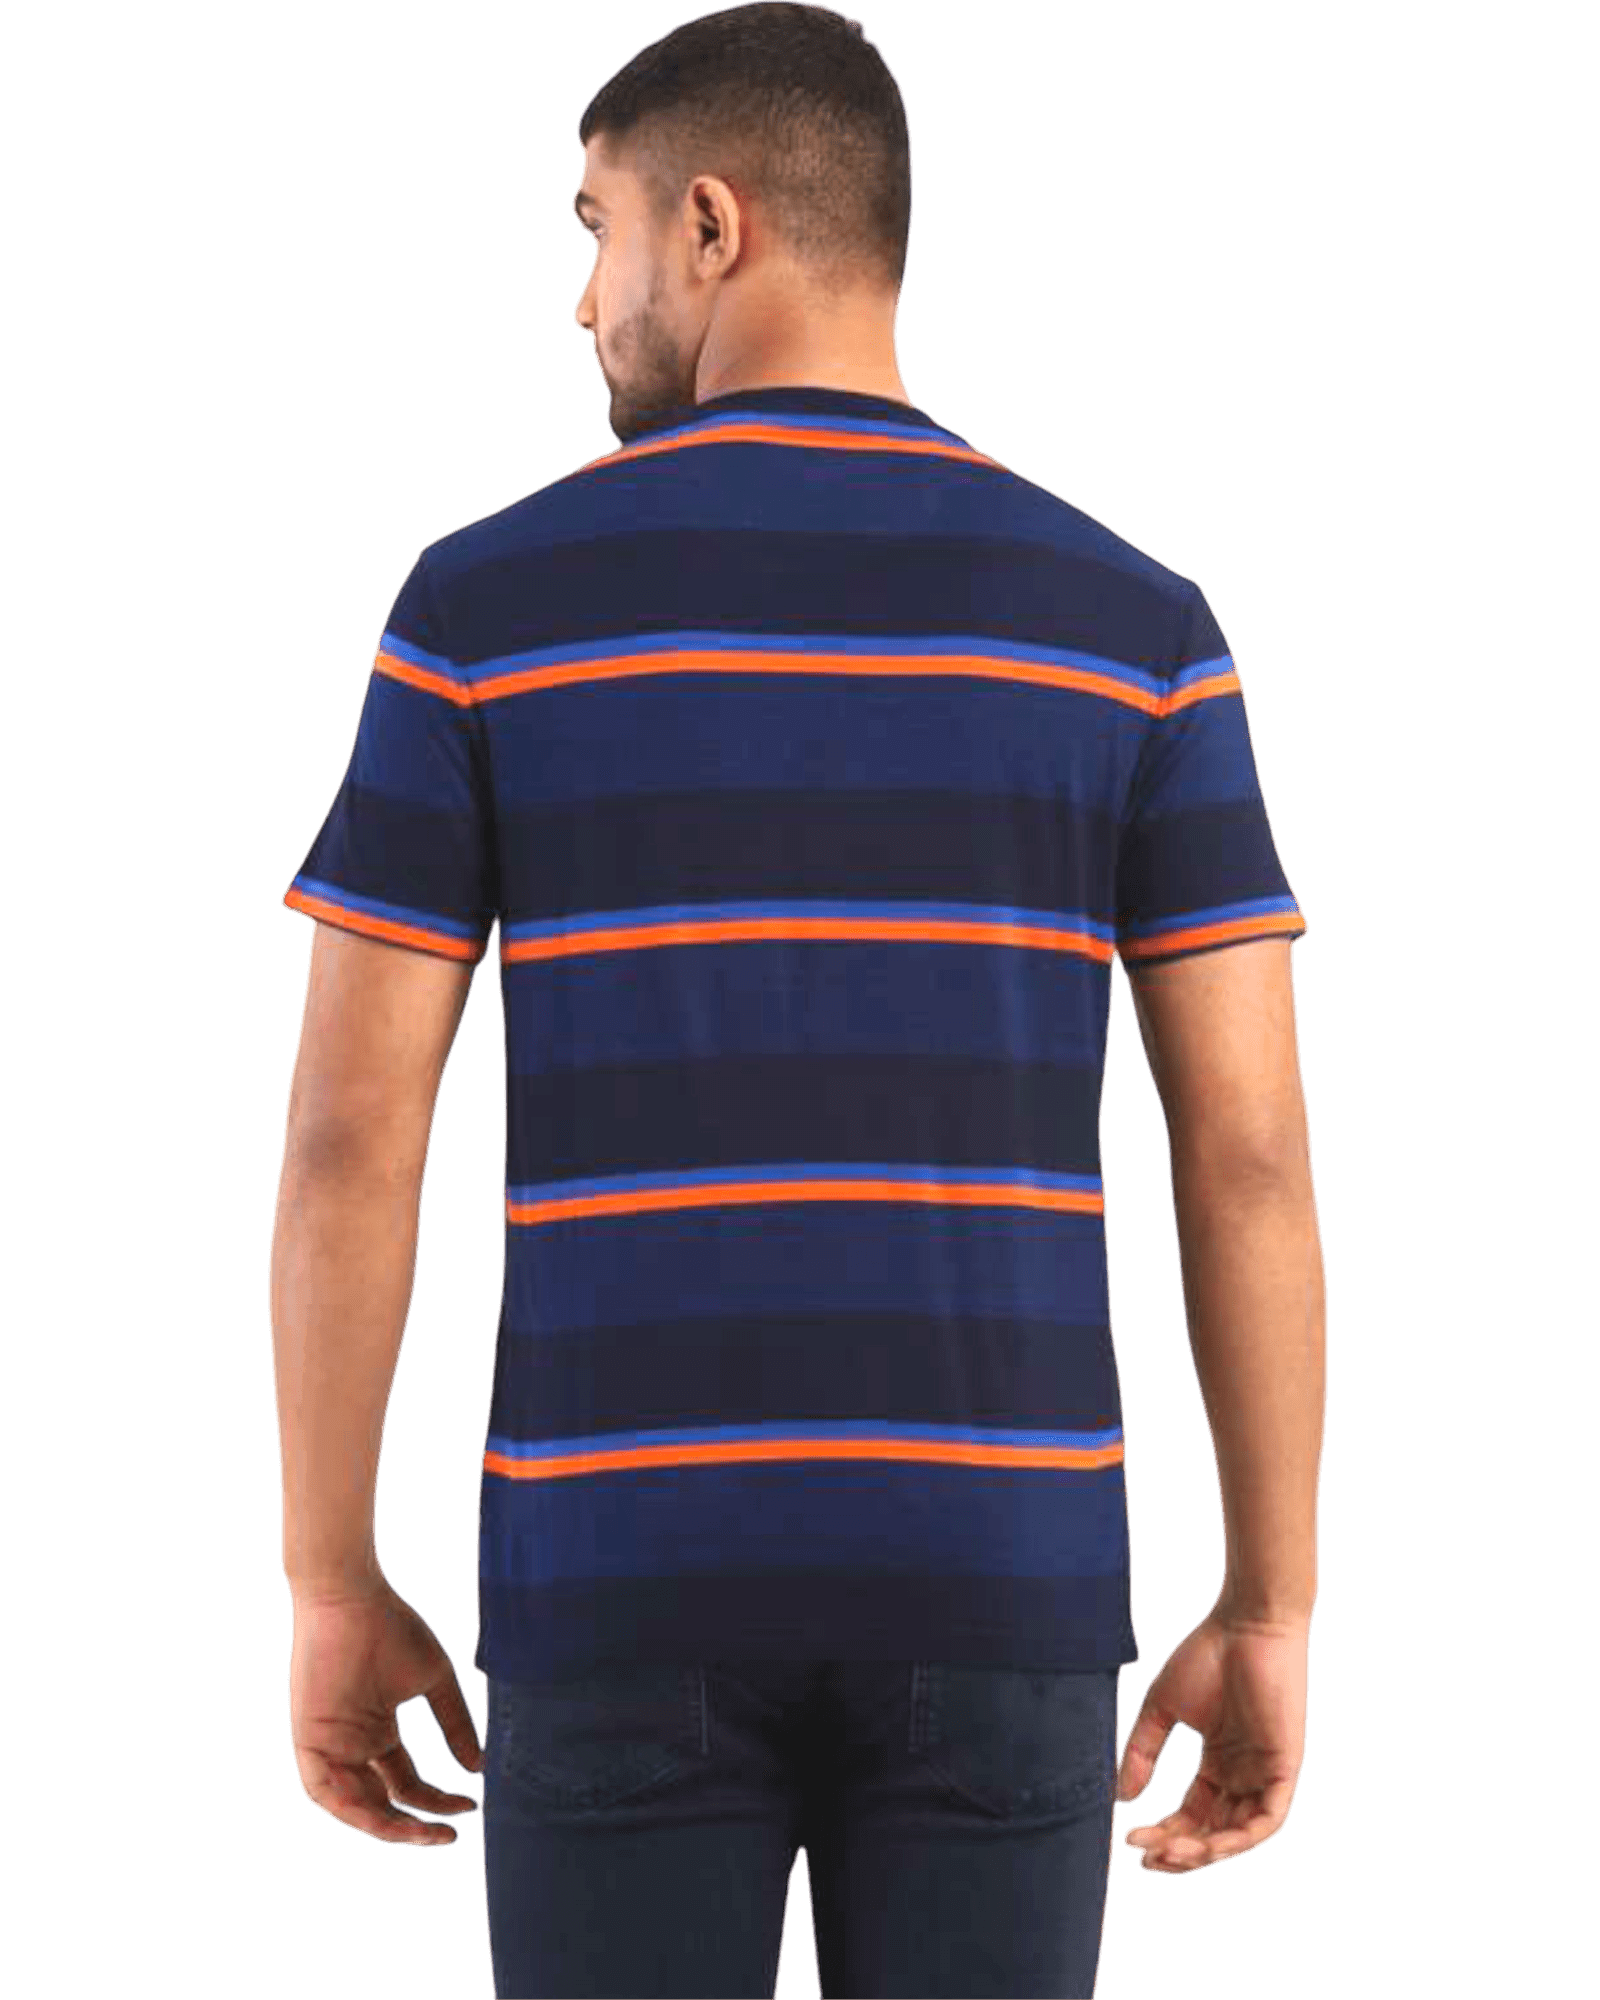 LEVI'S Striped Men Crew Neck T-shirt - Apparel For Less